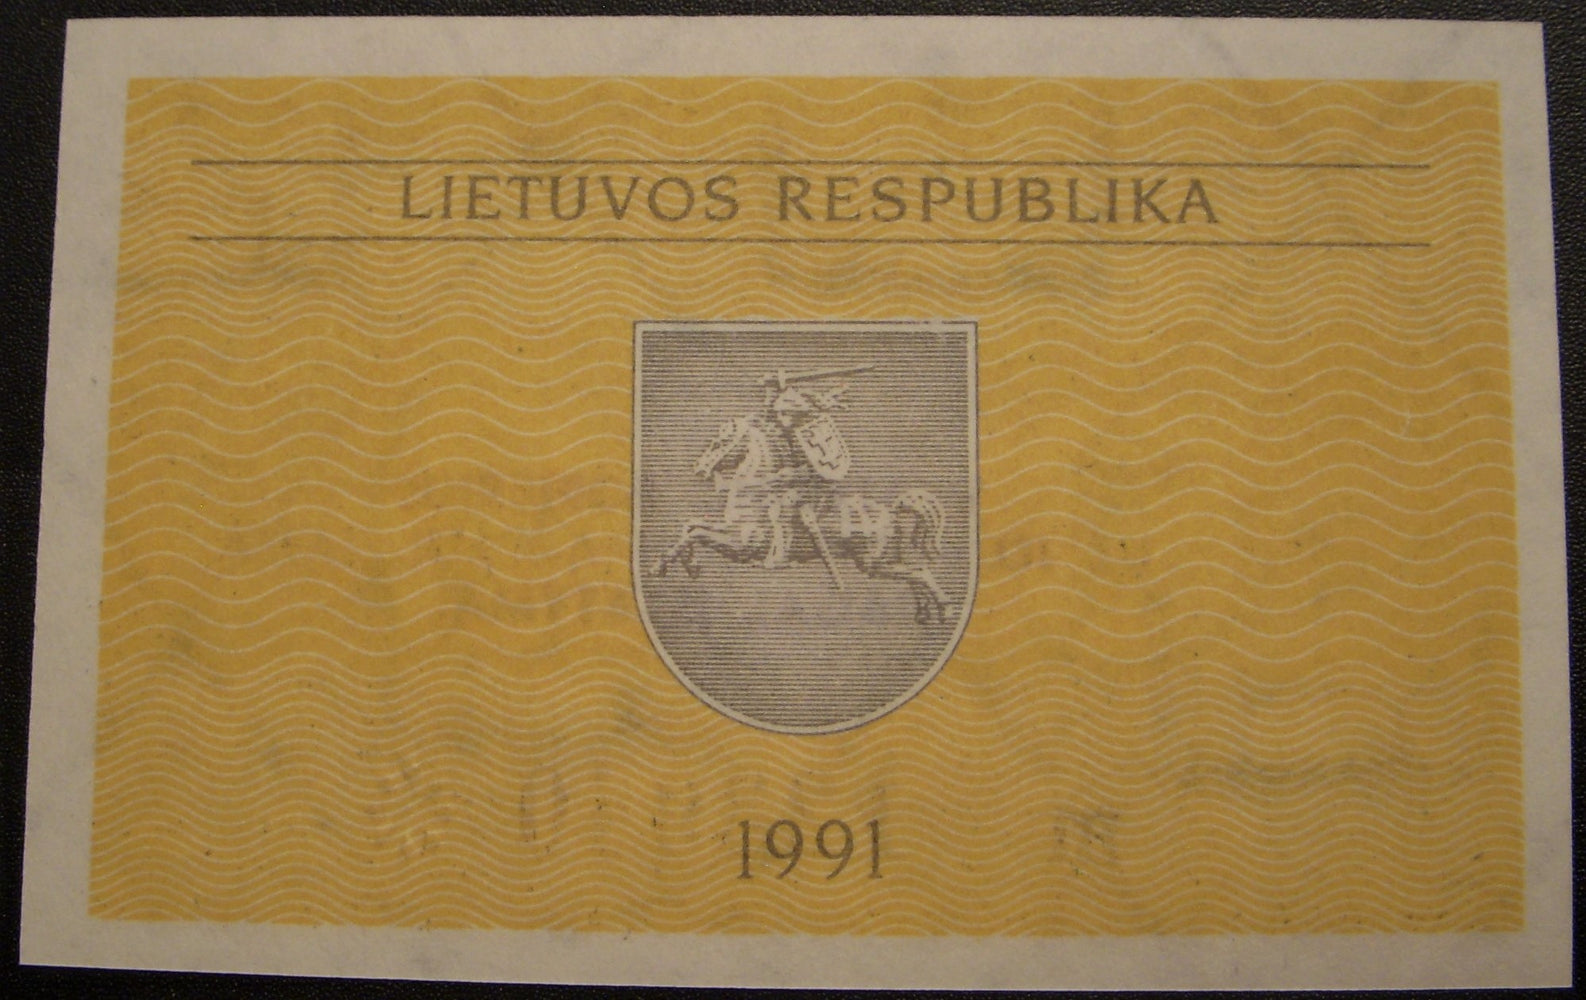 1991 0.50 Talonas Note - Lithuania